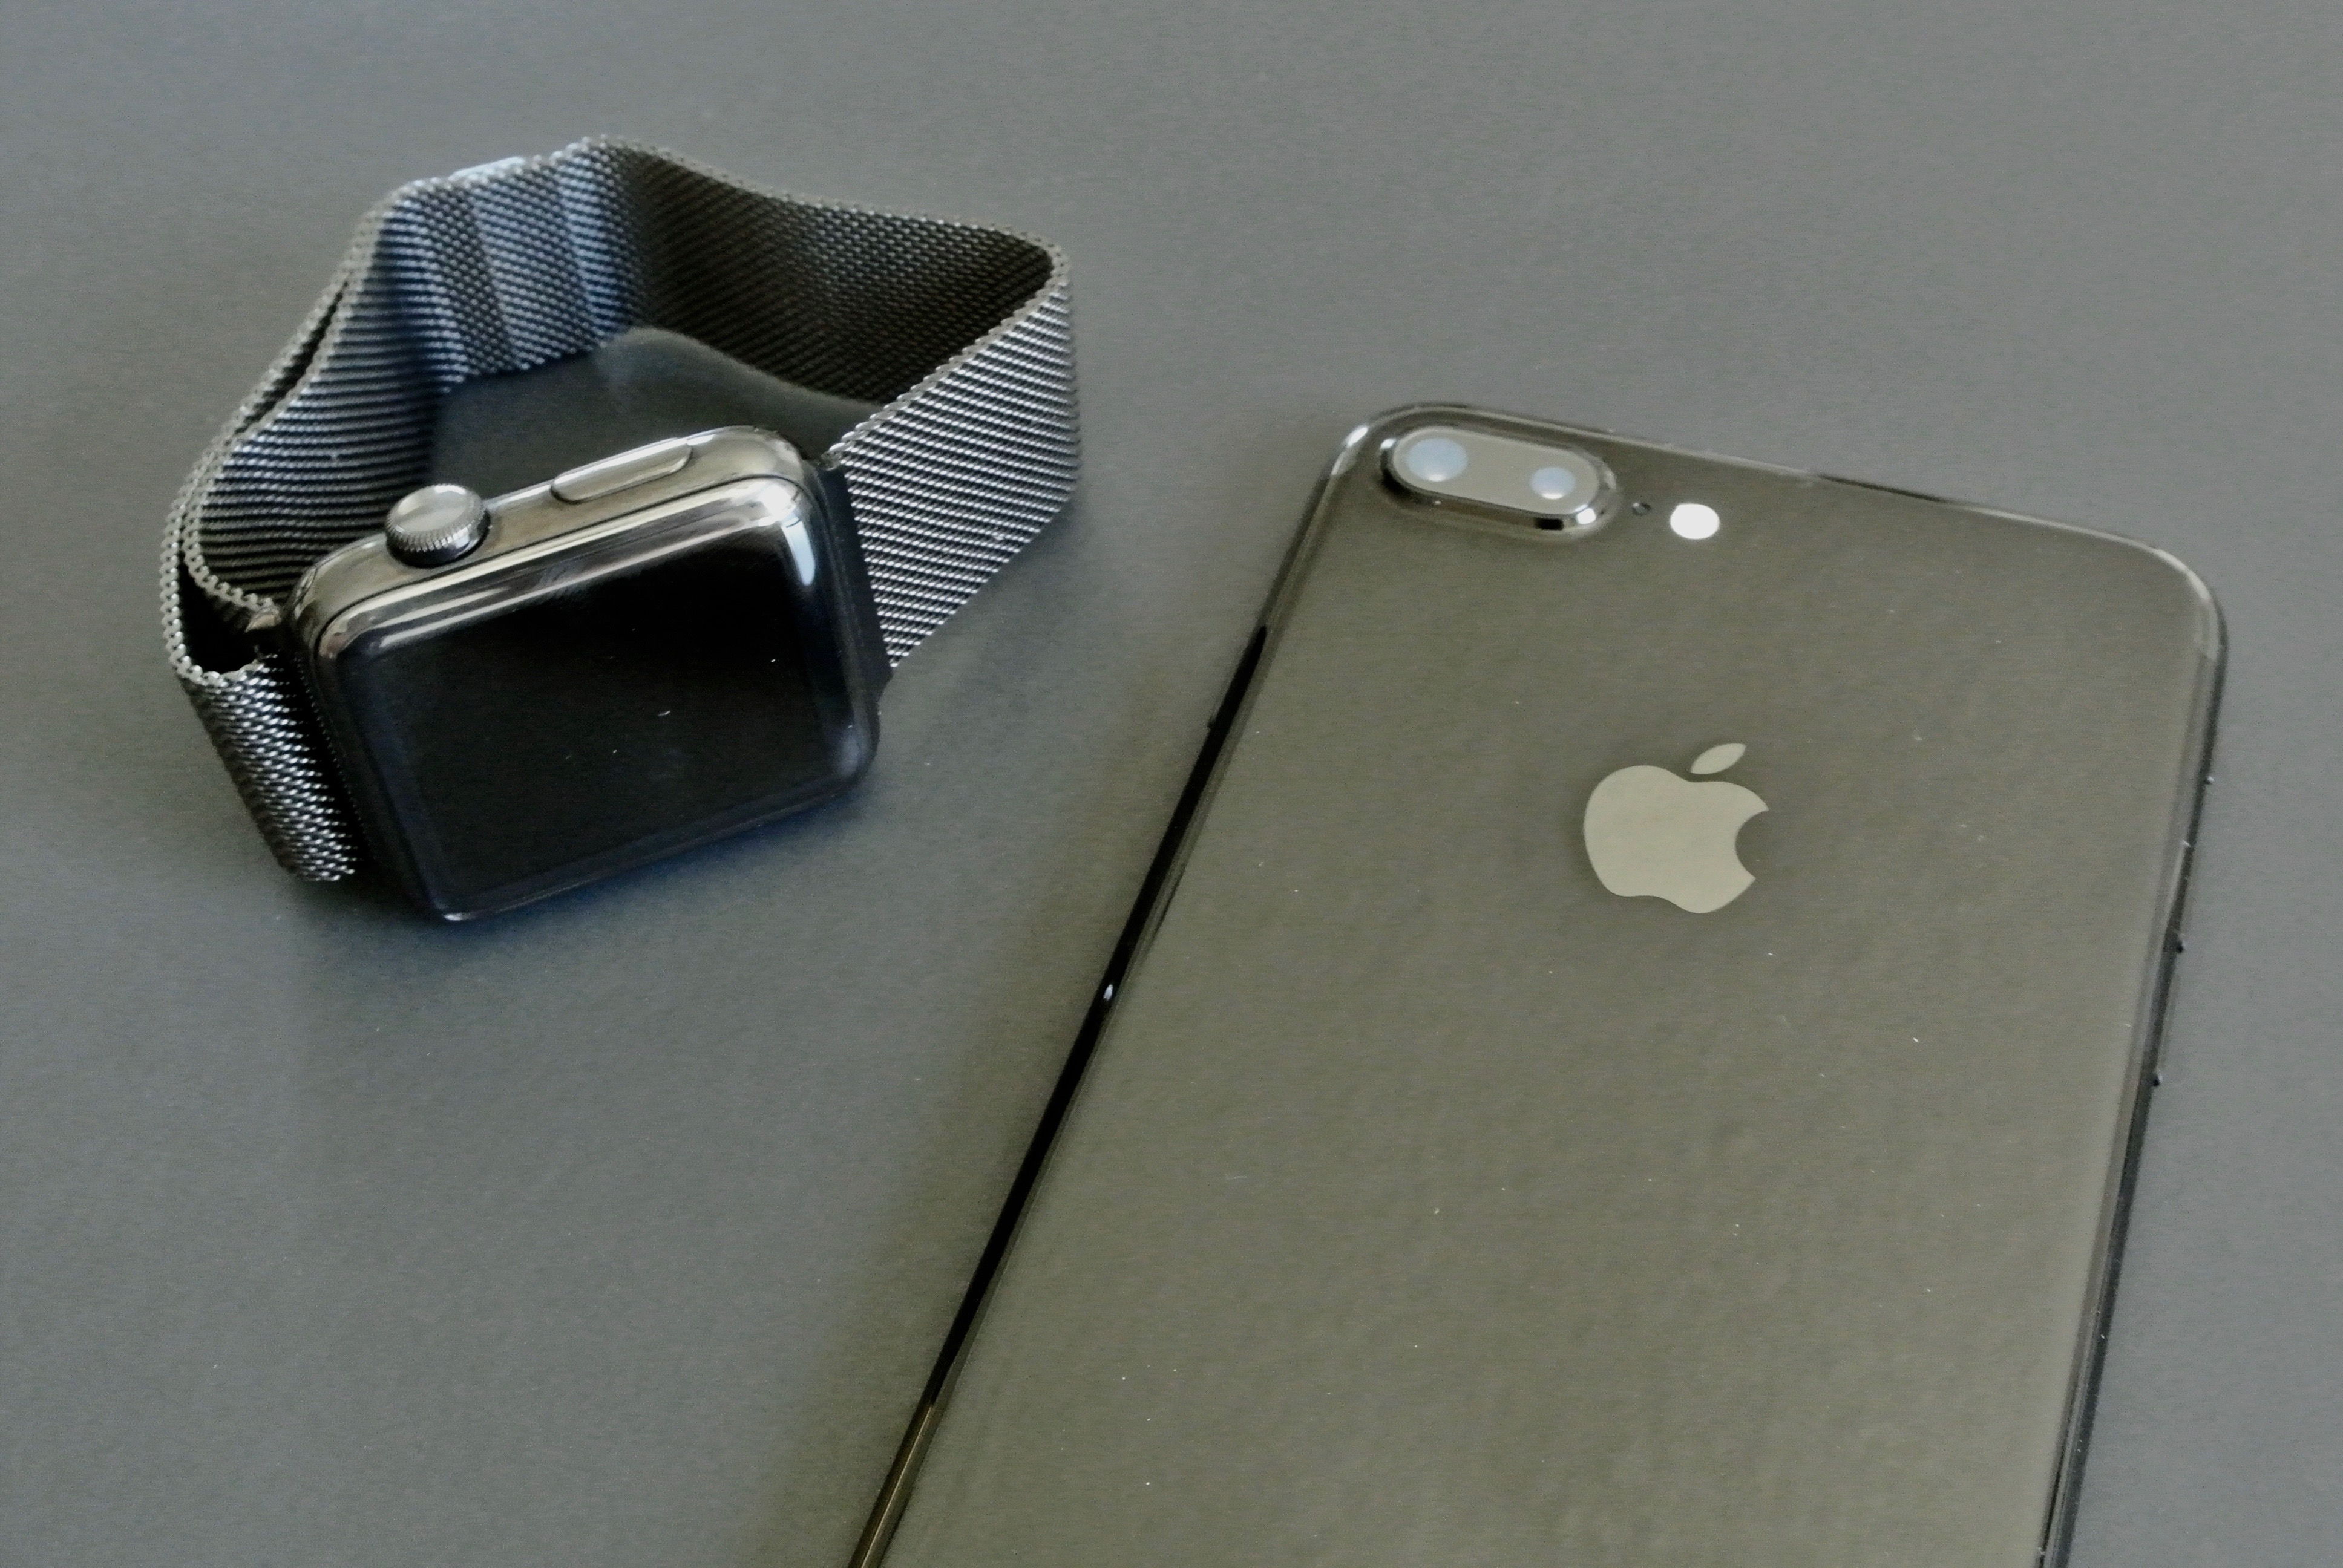 iPhone 7 Jet Black vs. Apple Watch Space Black 2